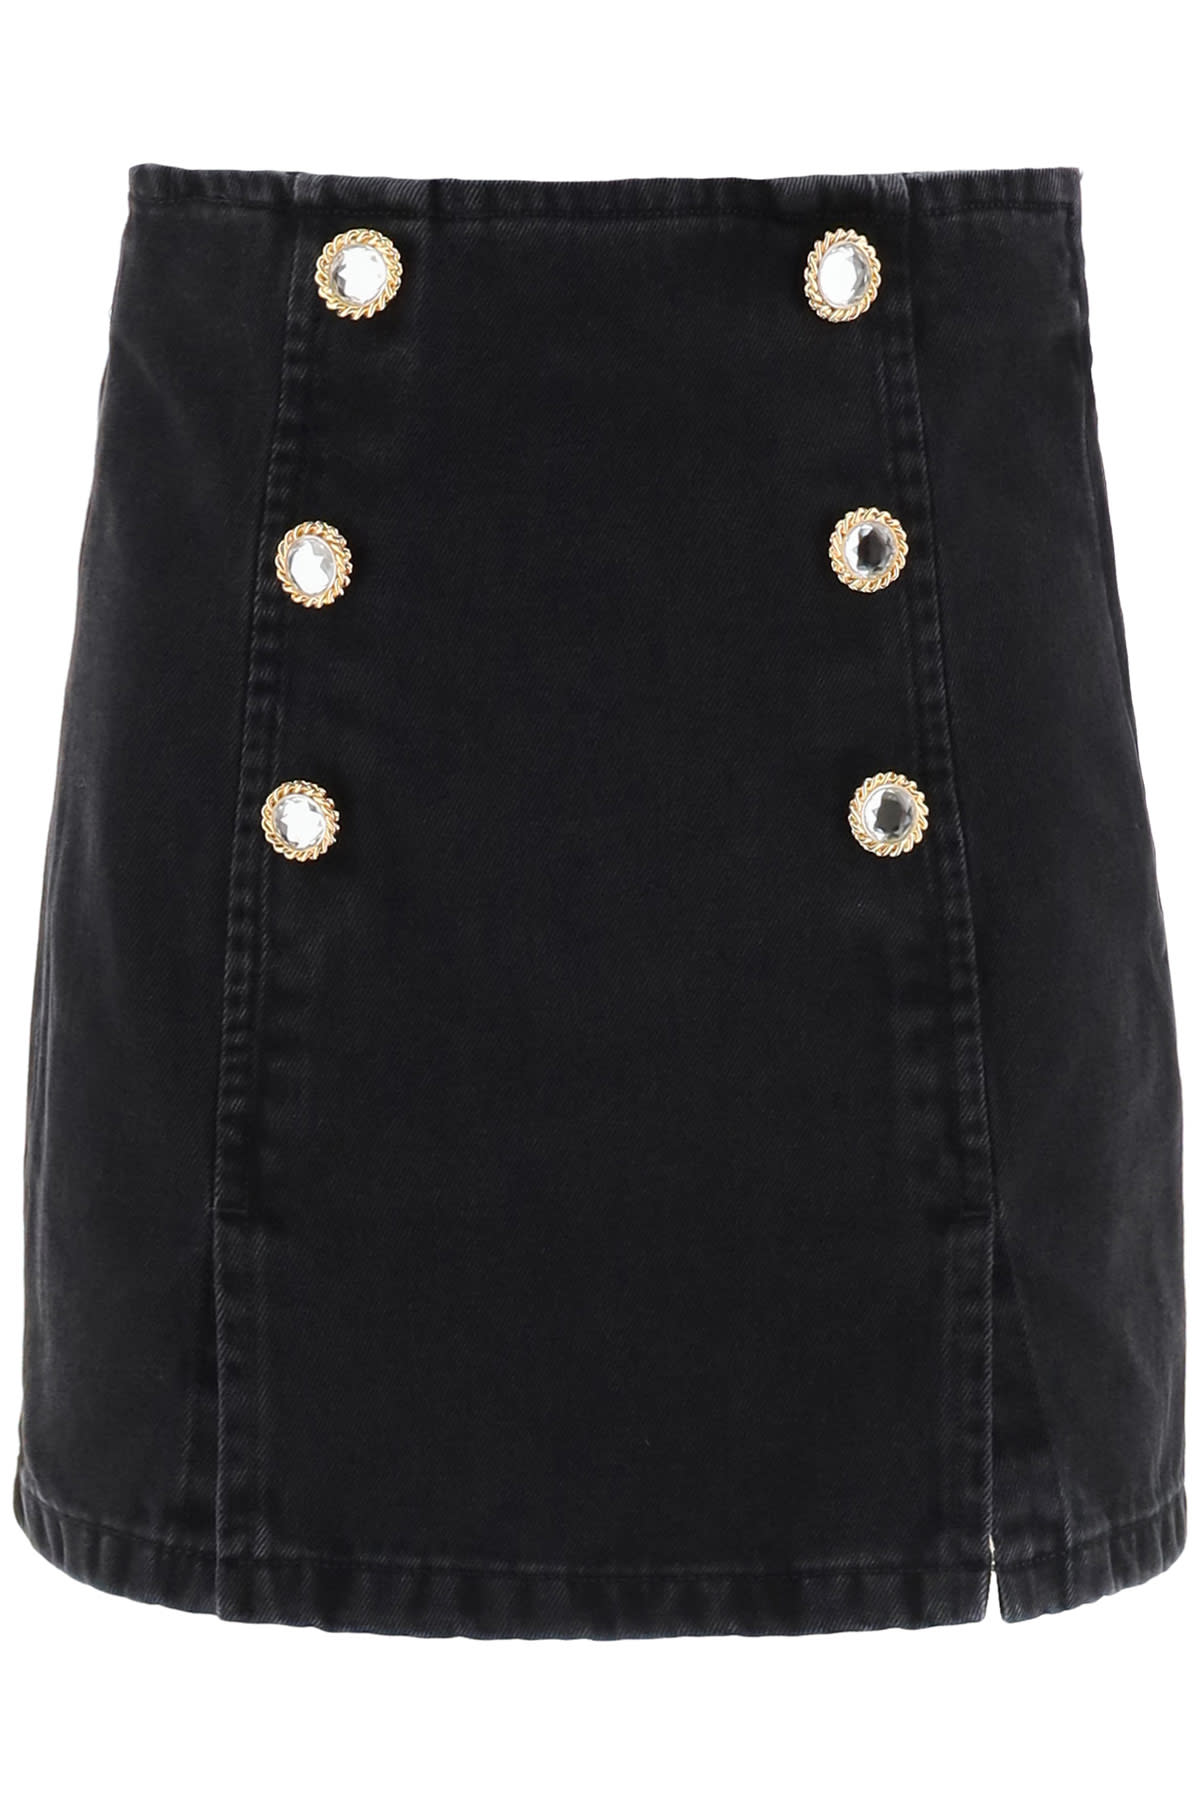 Alessandra Rich Denim Mini Skirt With Jewel Buttons